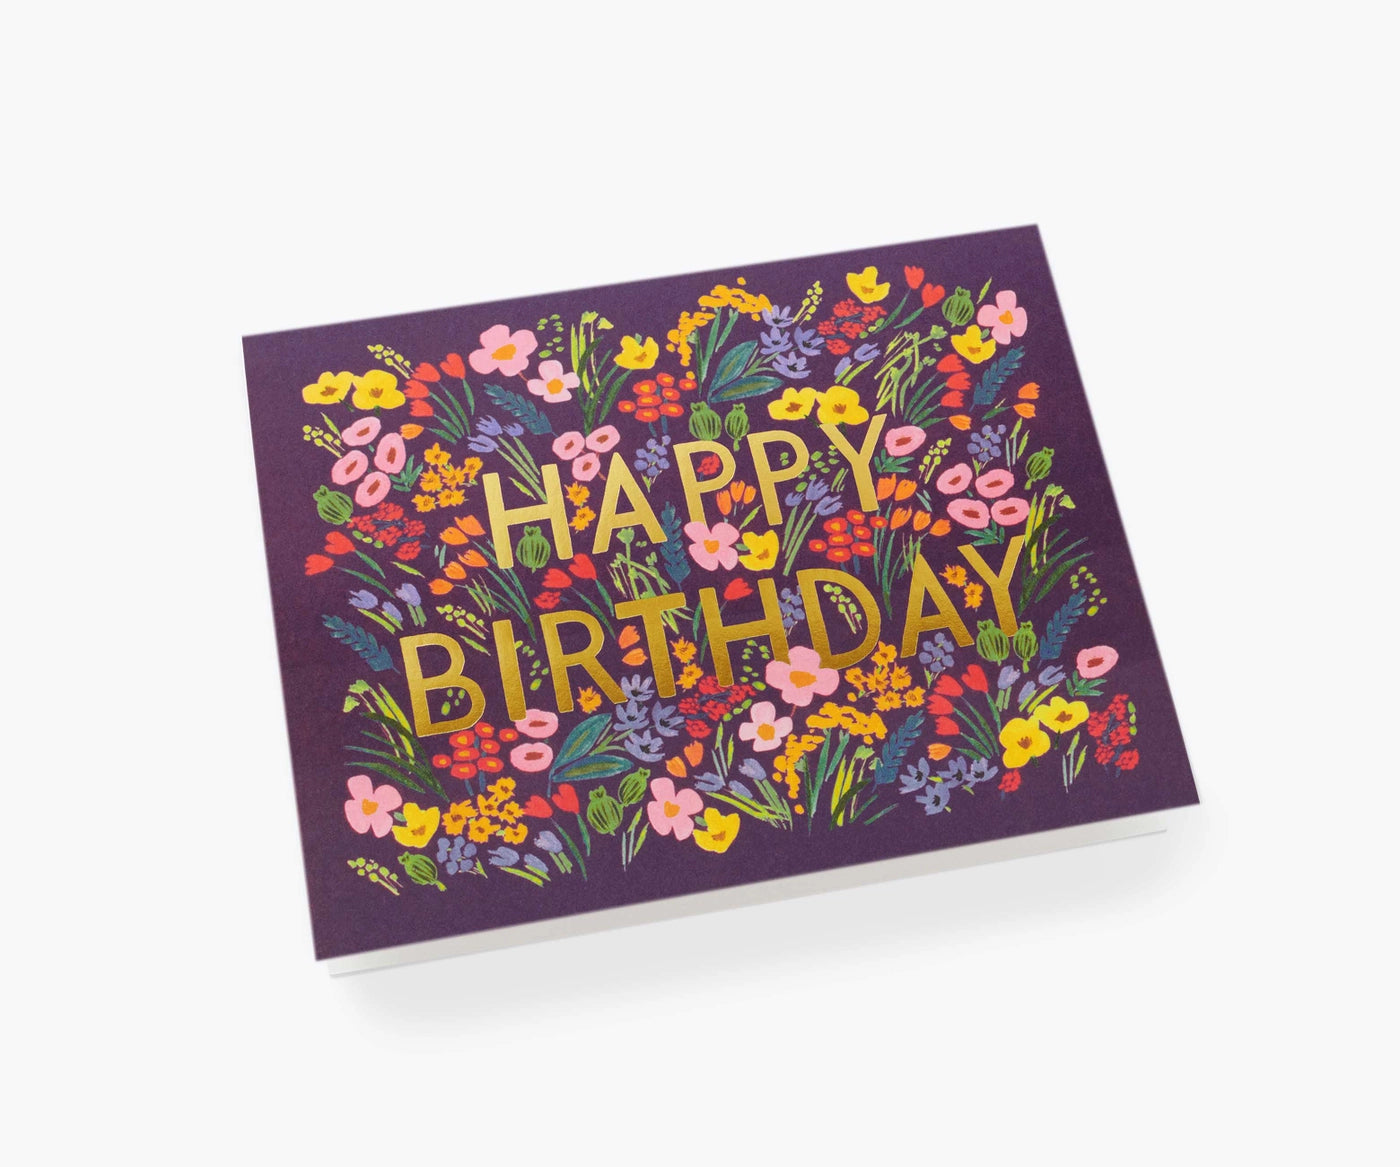 Lea Birthday Boxed Cards